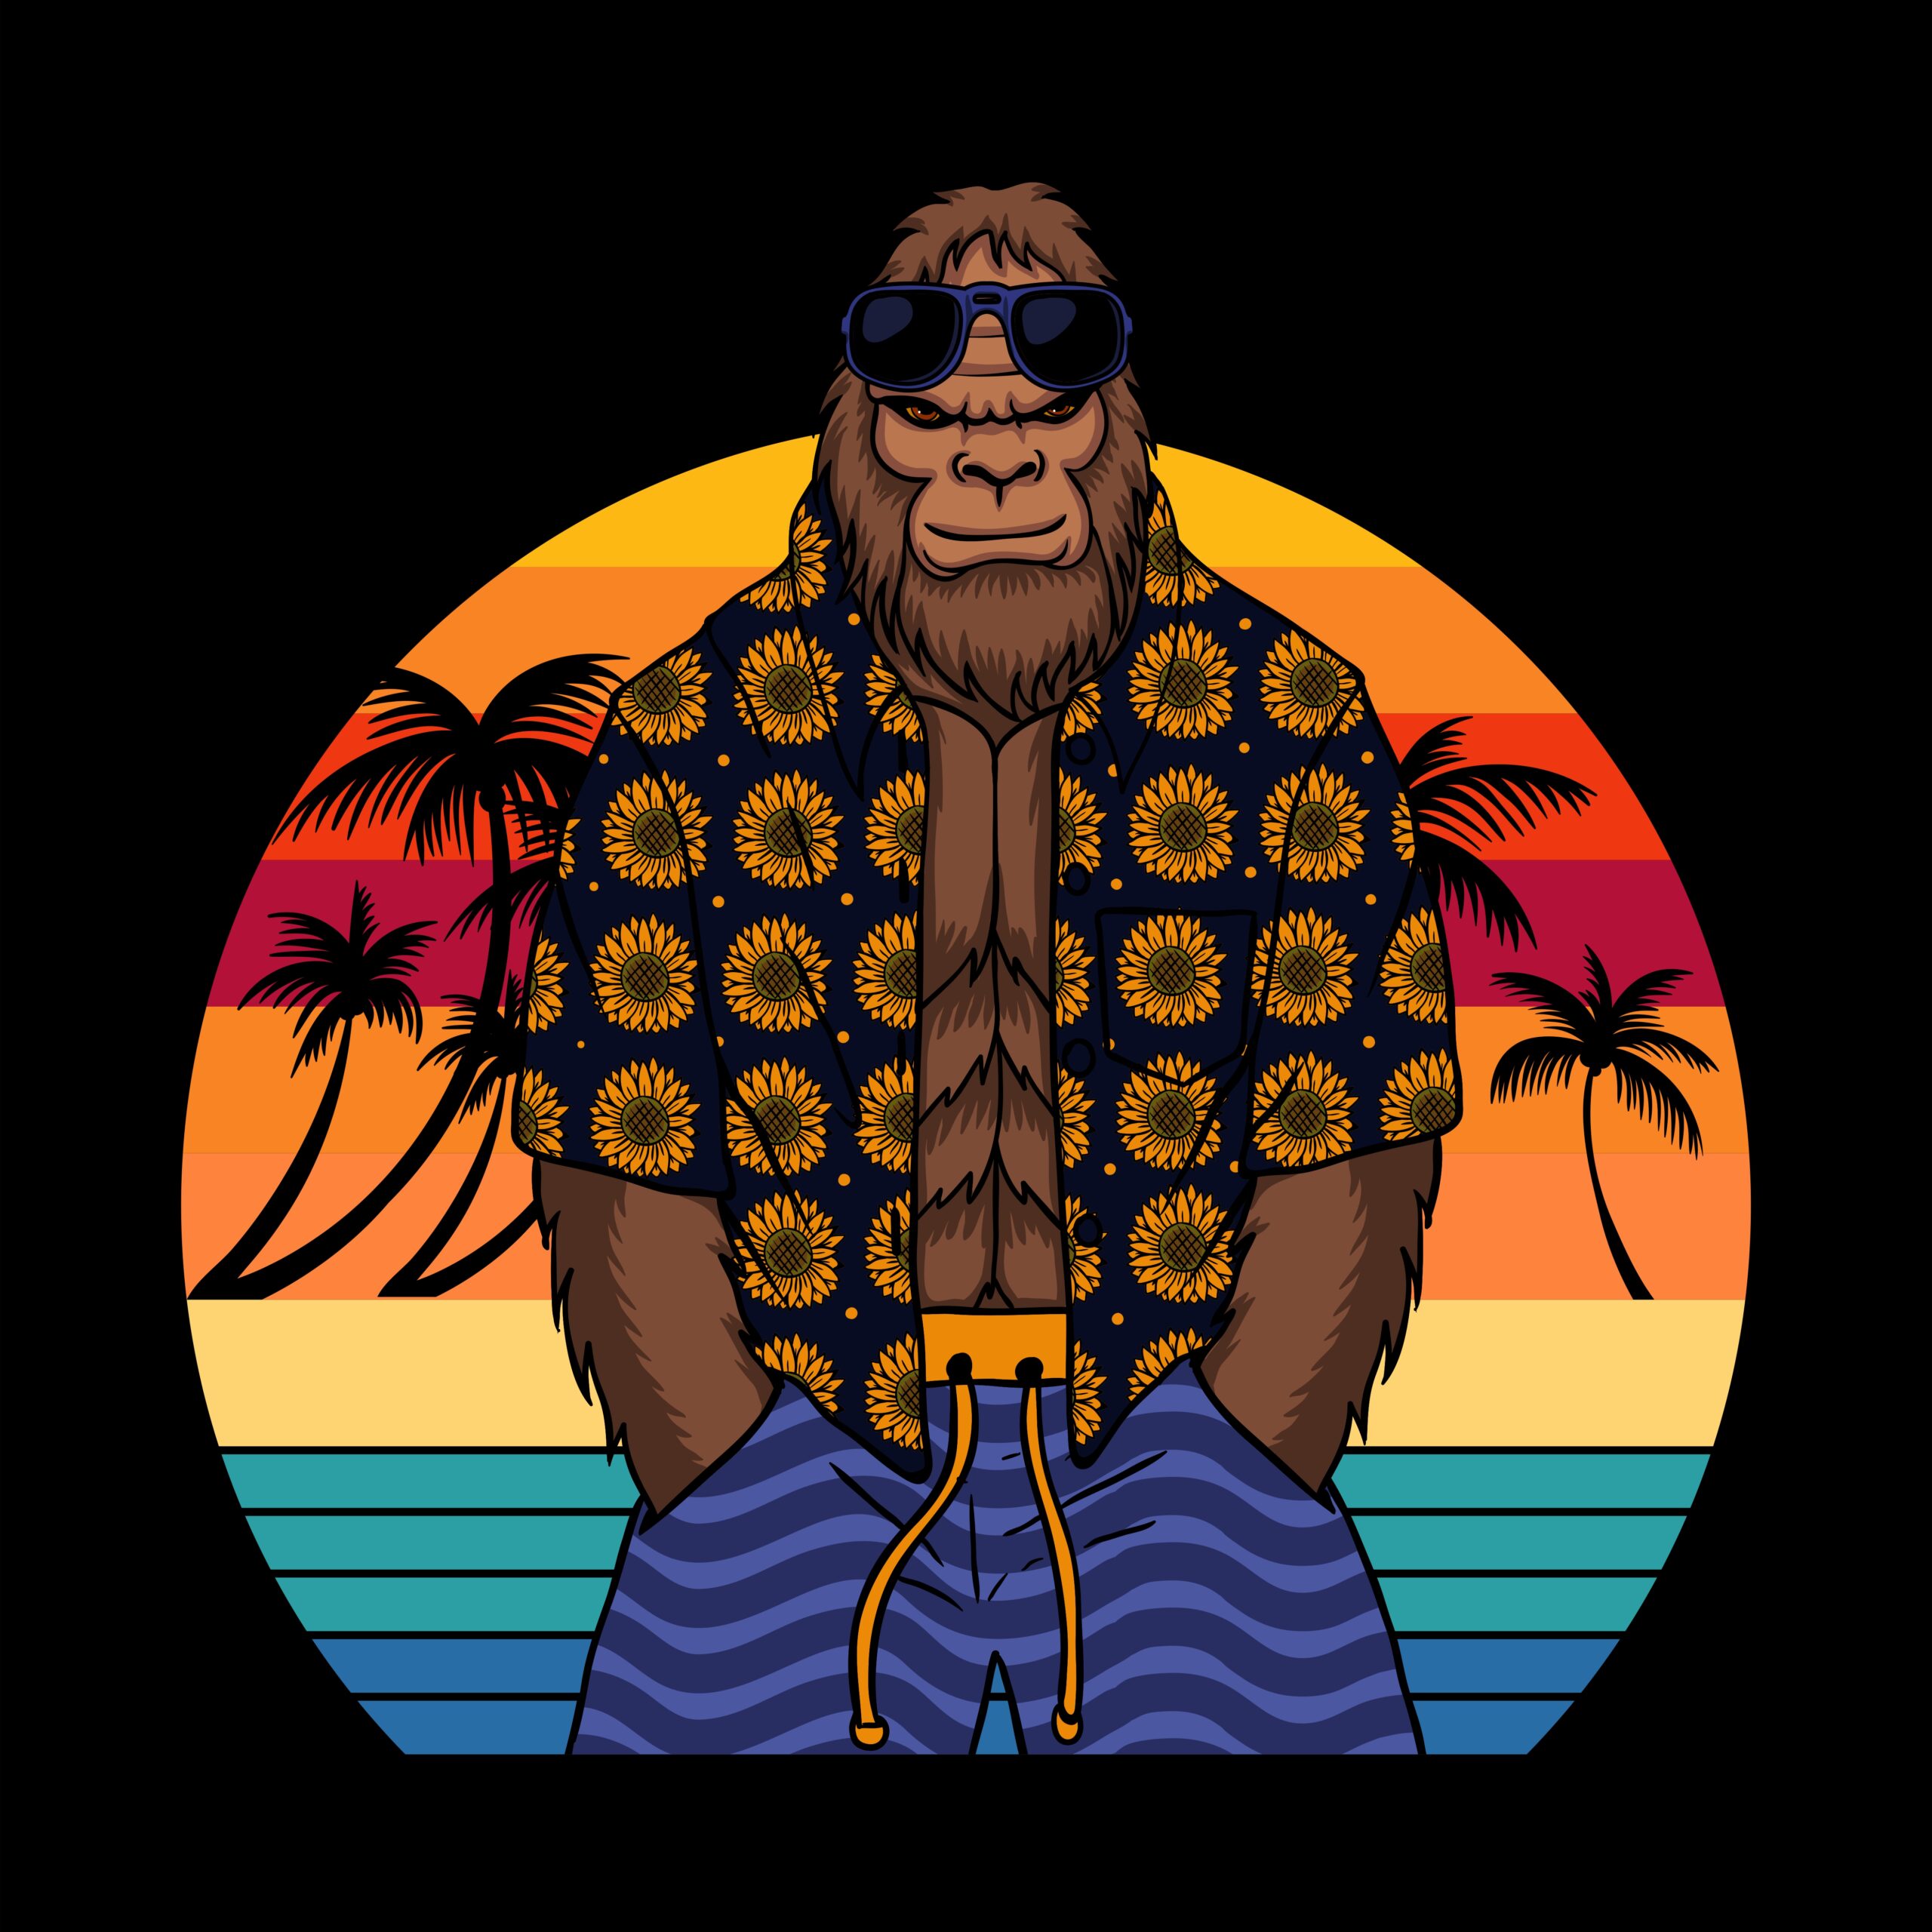 bigfoot at the beach wearing sunglasses, a Hawaiian shirt, and swimming trunks.